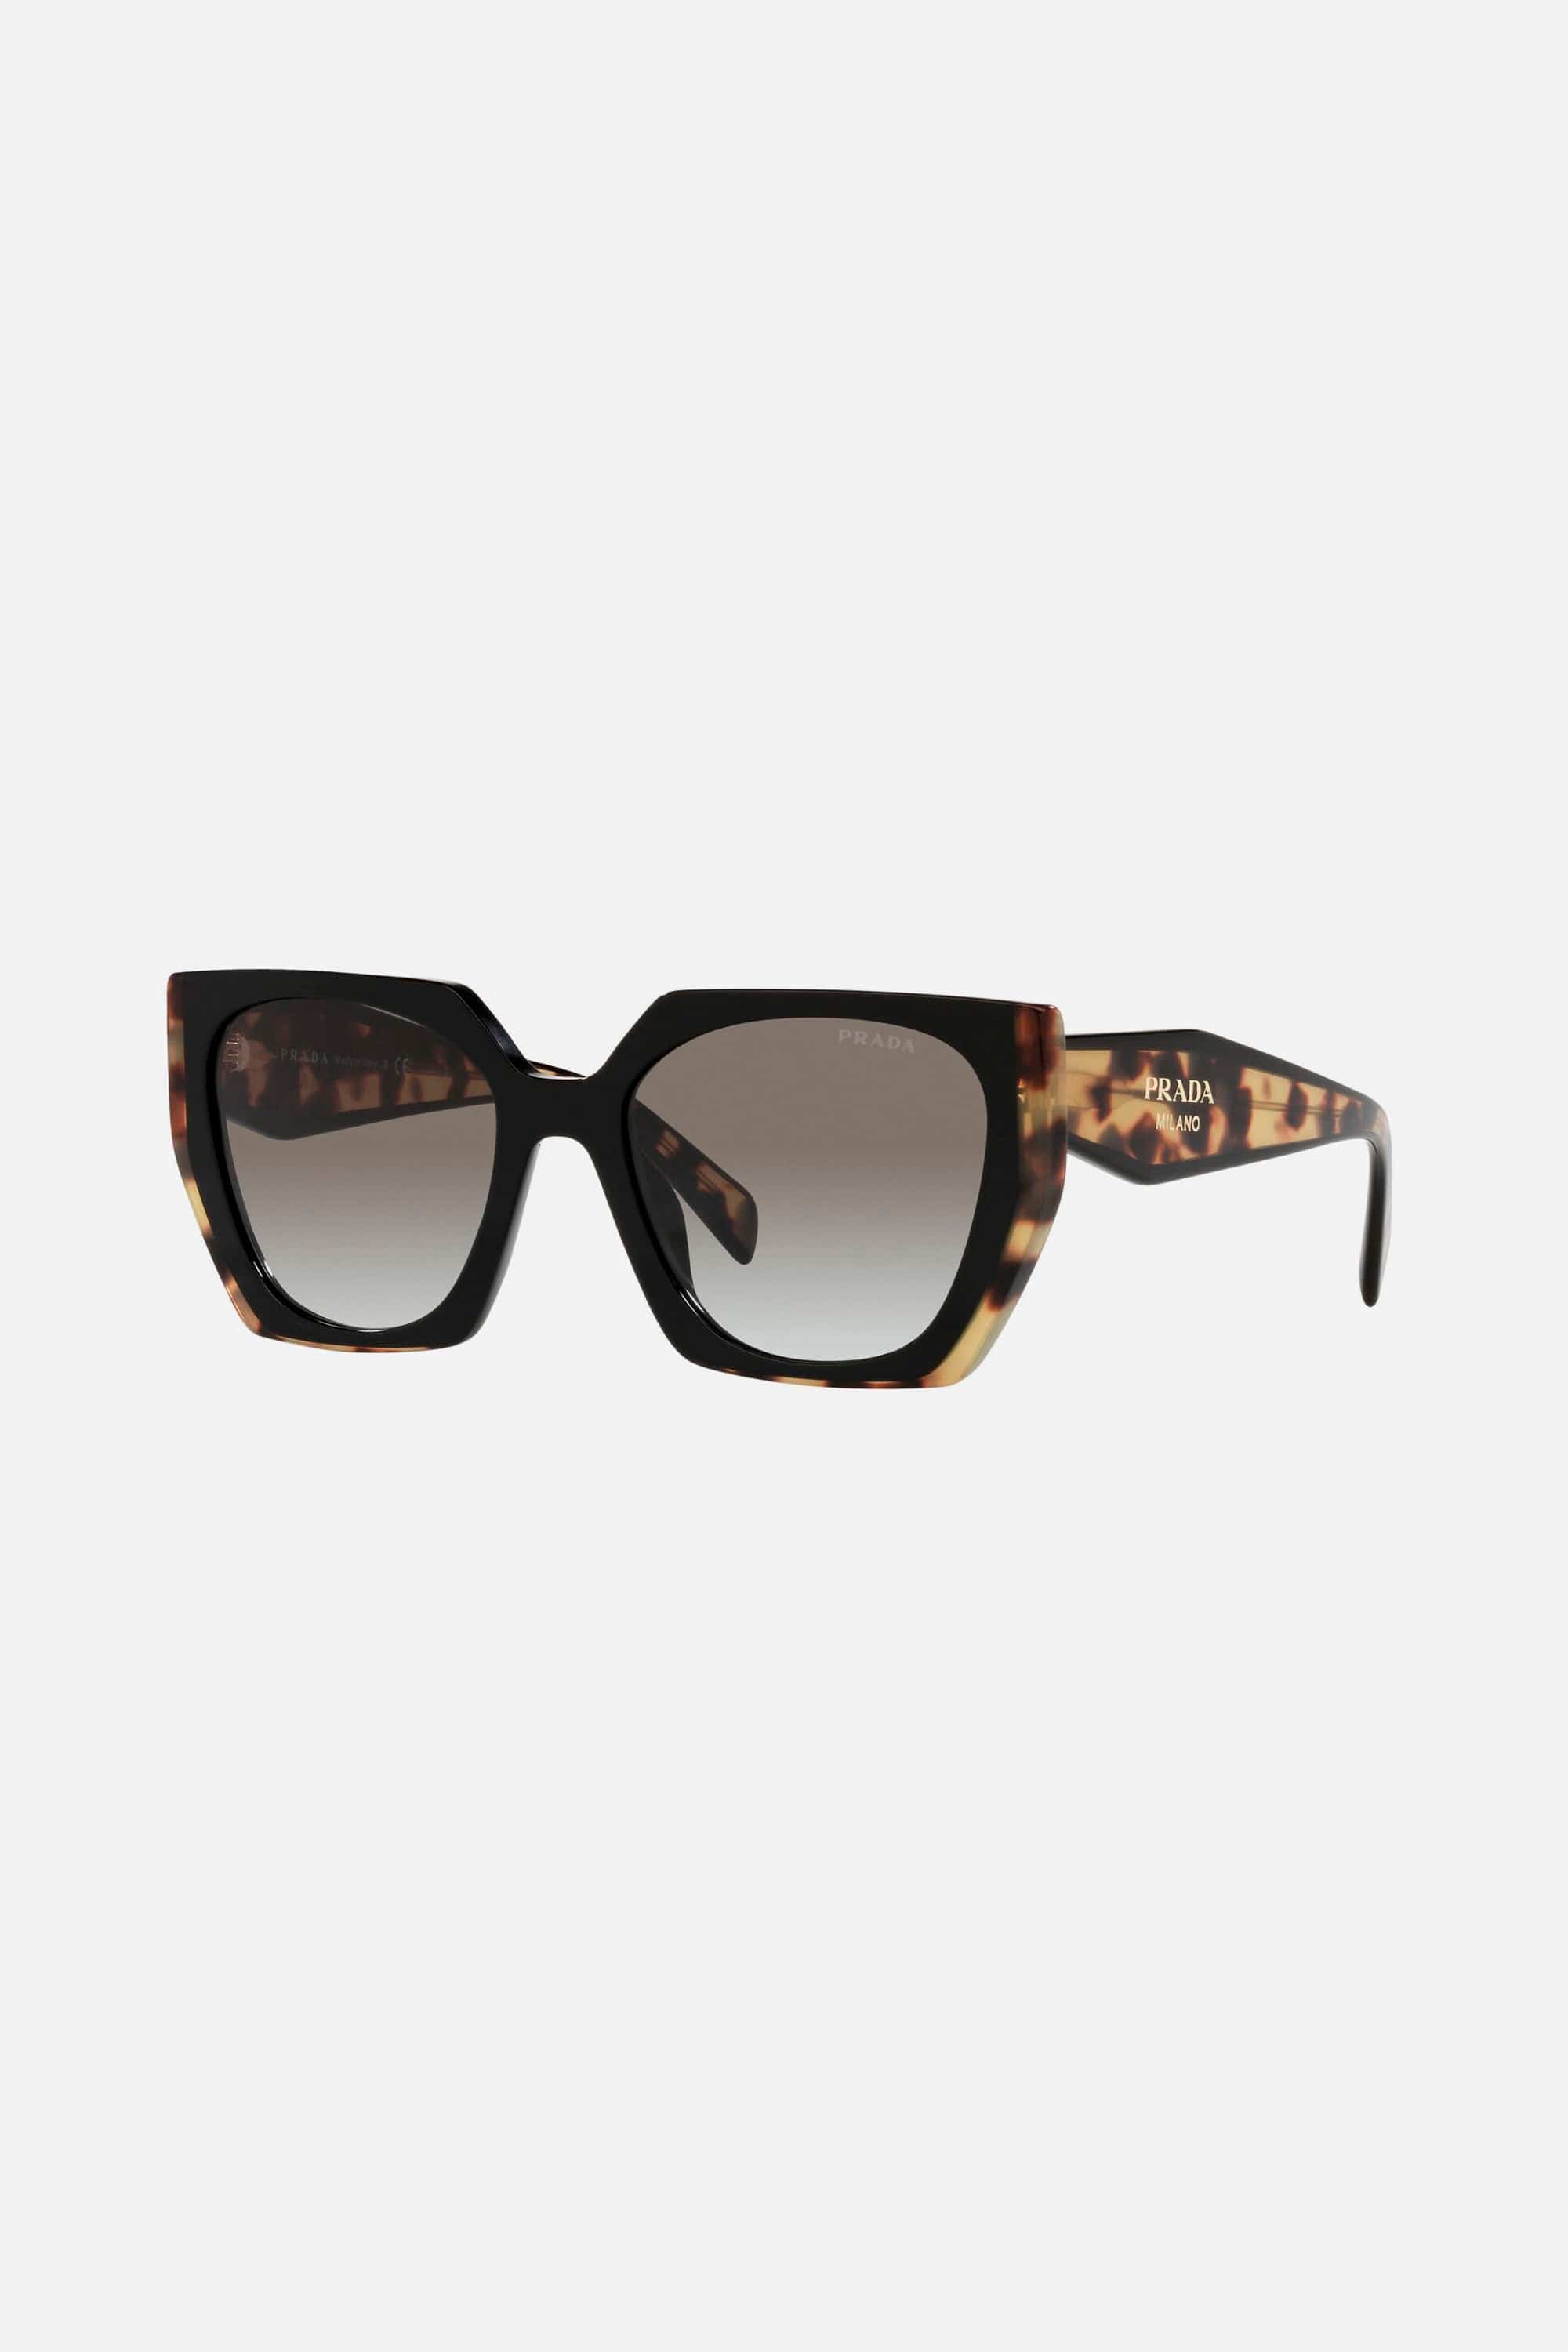 Prada oversized cat eye black and havana sunglasses - Eyewear Club